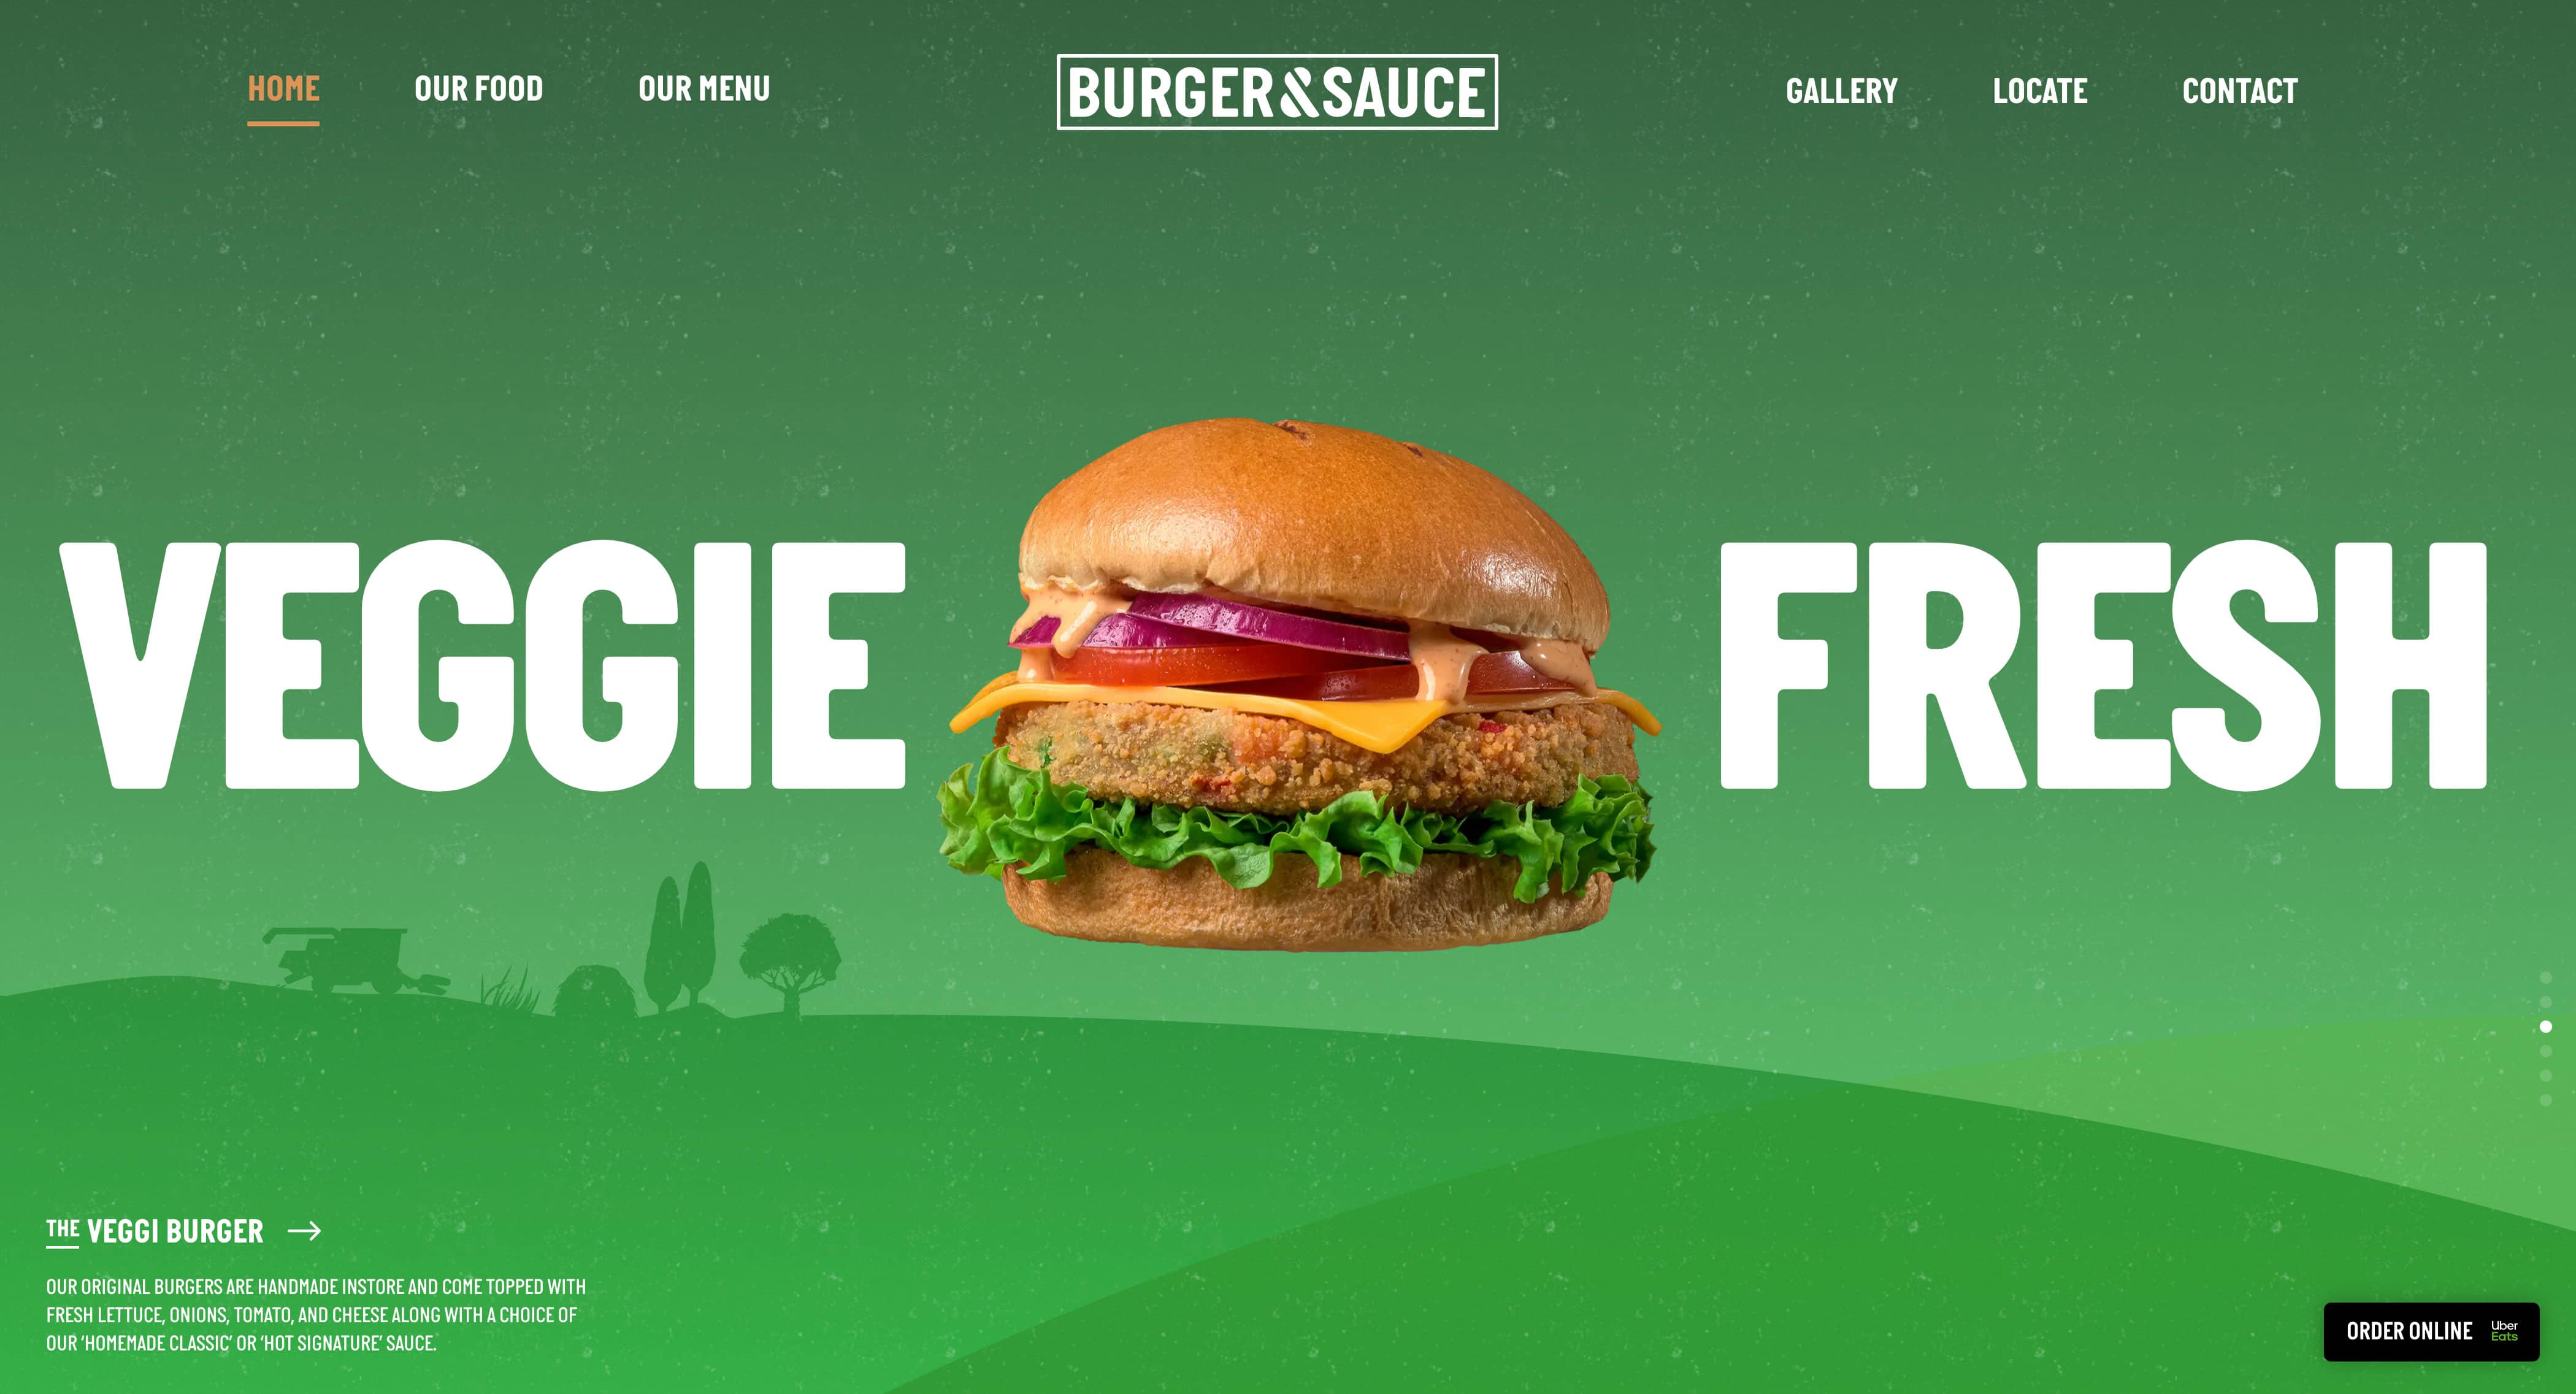 veggie fresh frozen burger and sauce banner design